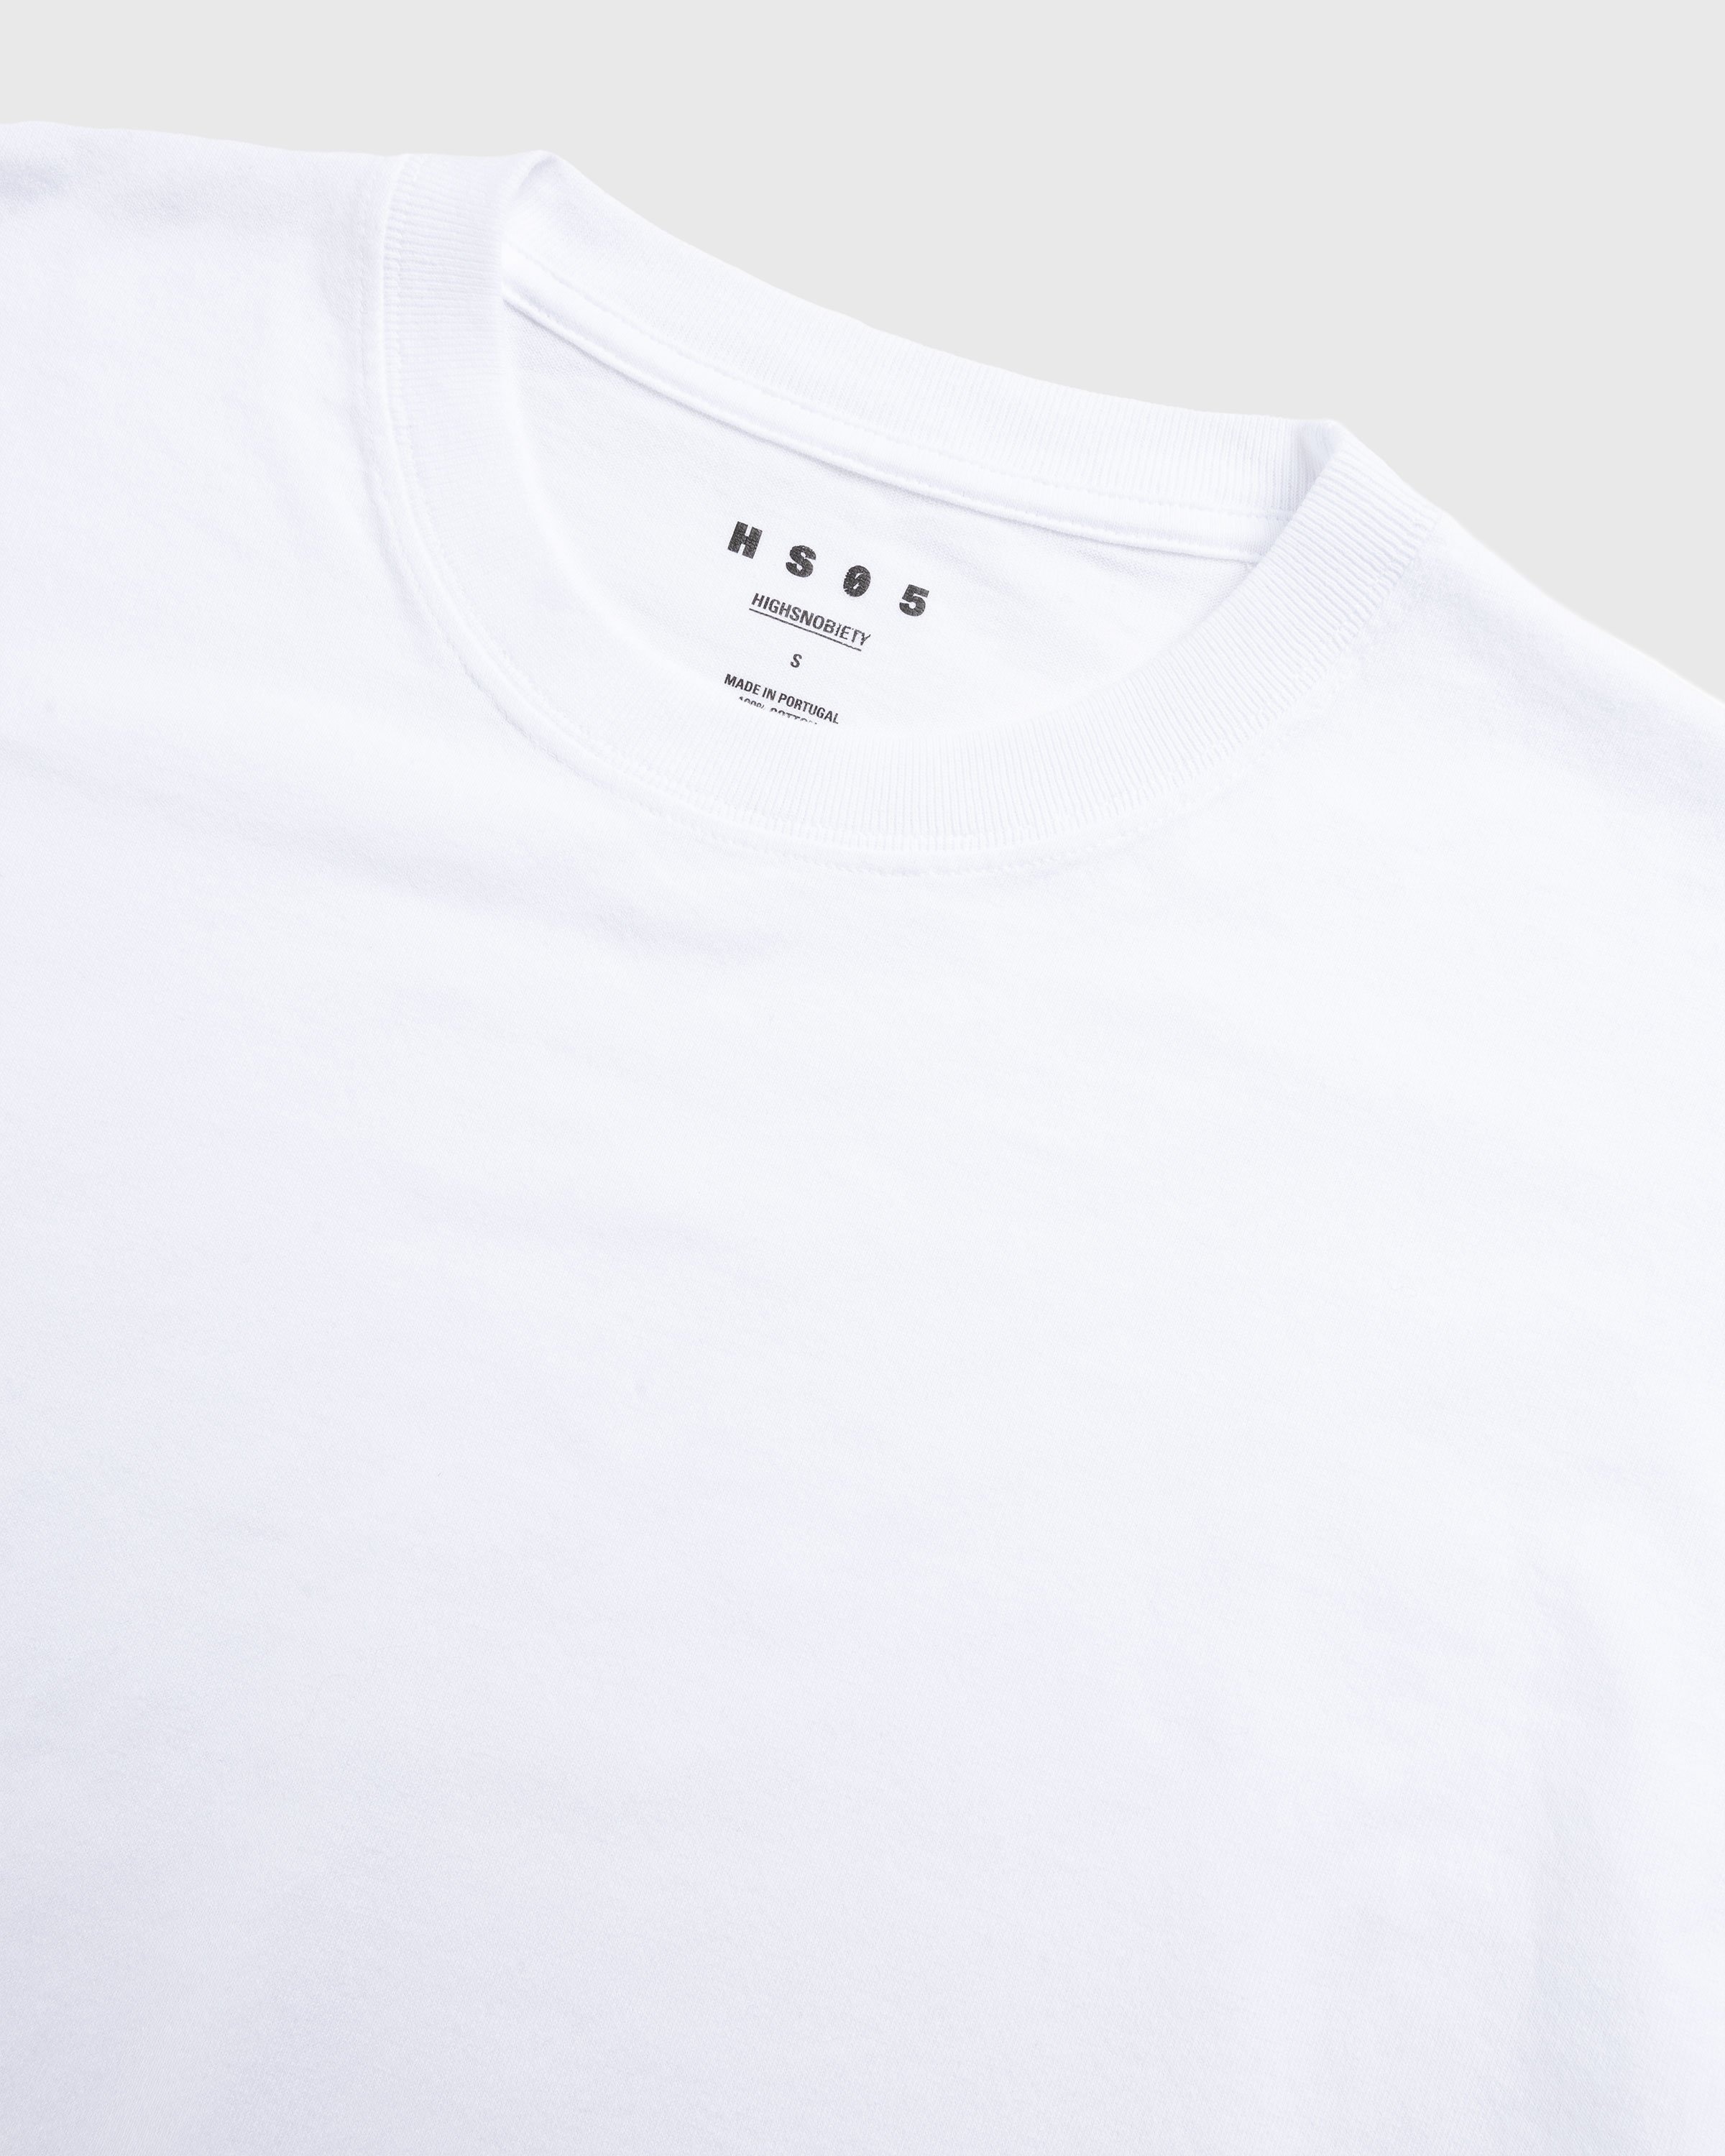 Highsnobiety HS05 – 3 Pack T-Shirts White - T-shirts - White - Image 3